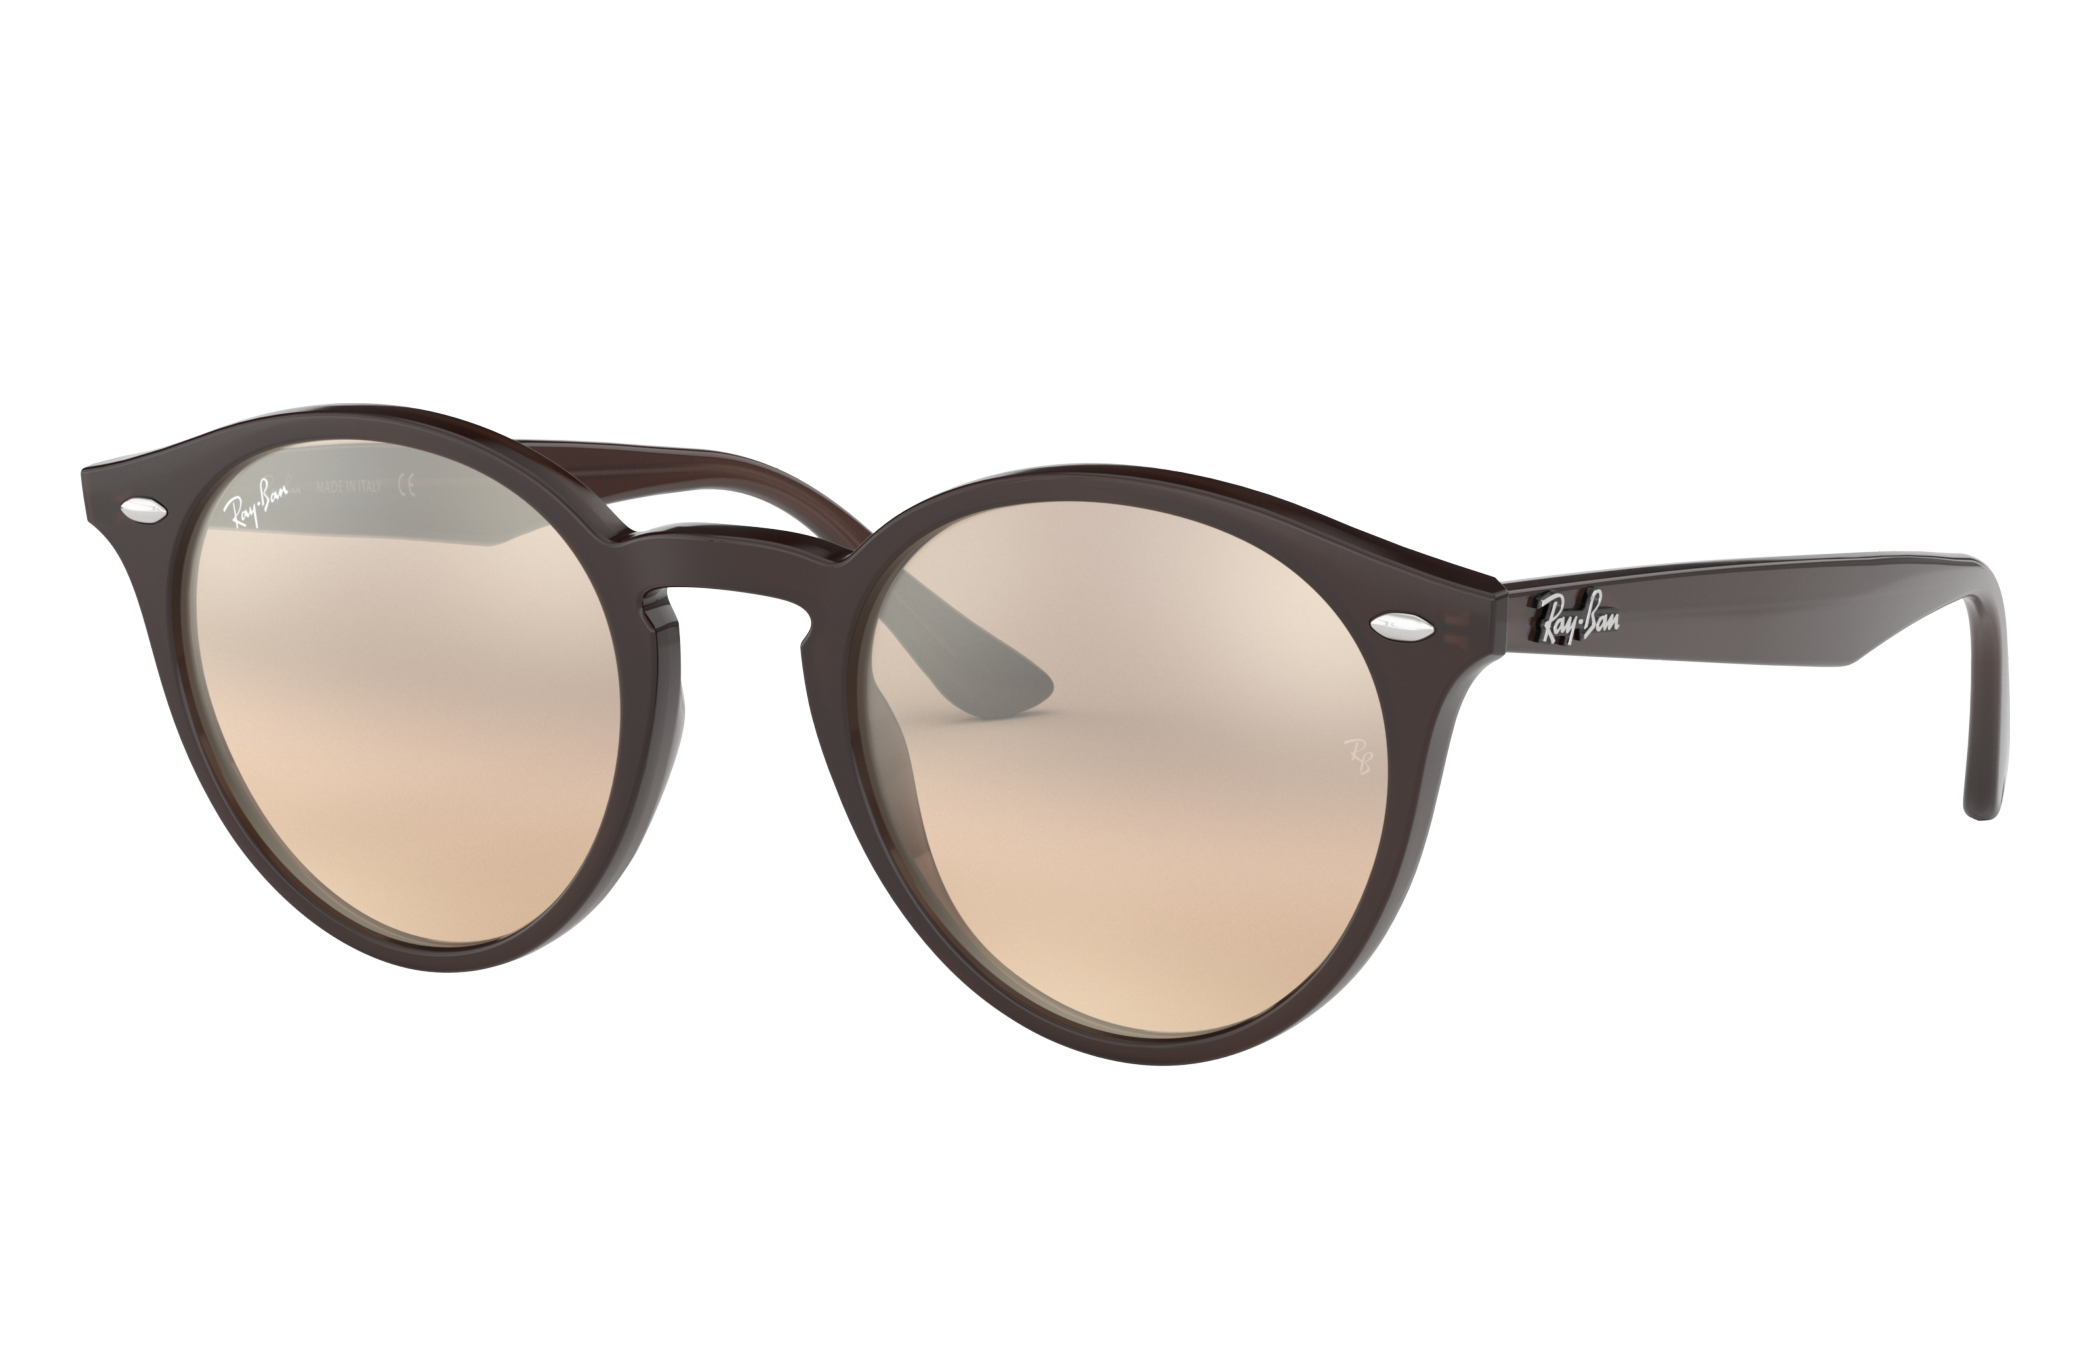 Verplicht Tekstschrijver Klas Rb2180 Sunglasses in Brown and Brown/Silver | Ray-Ban®